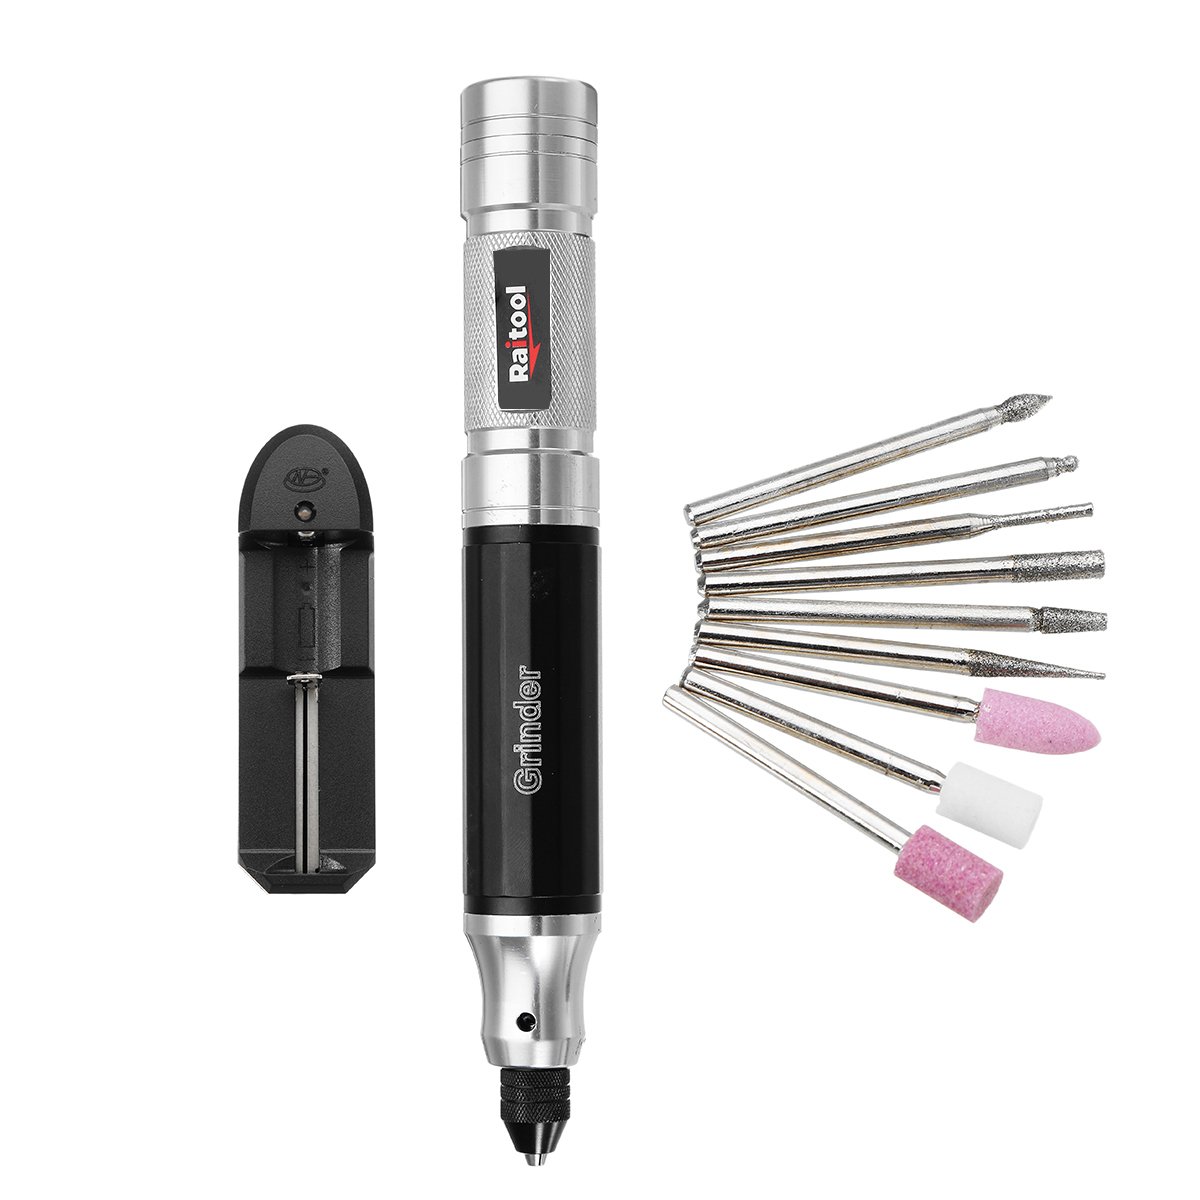 Raitool™ 3.7V 35W Mini Power Drills Electric Grinder Cordless Engraving Pen 1